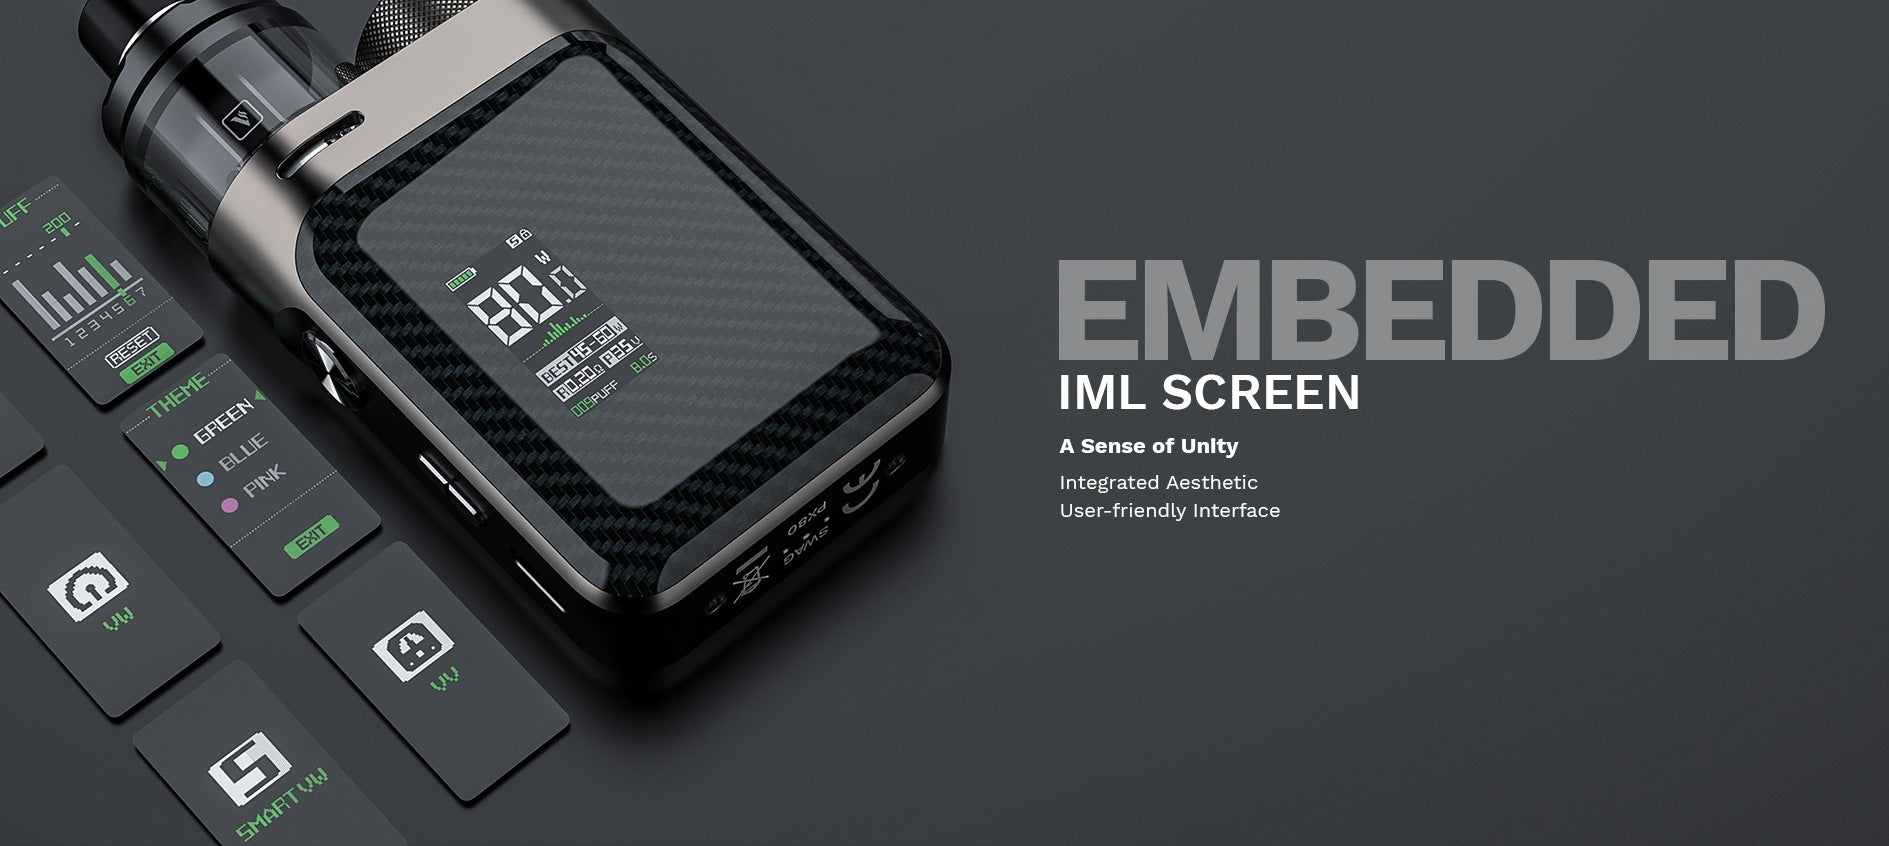 Embedded IML screen